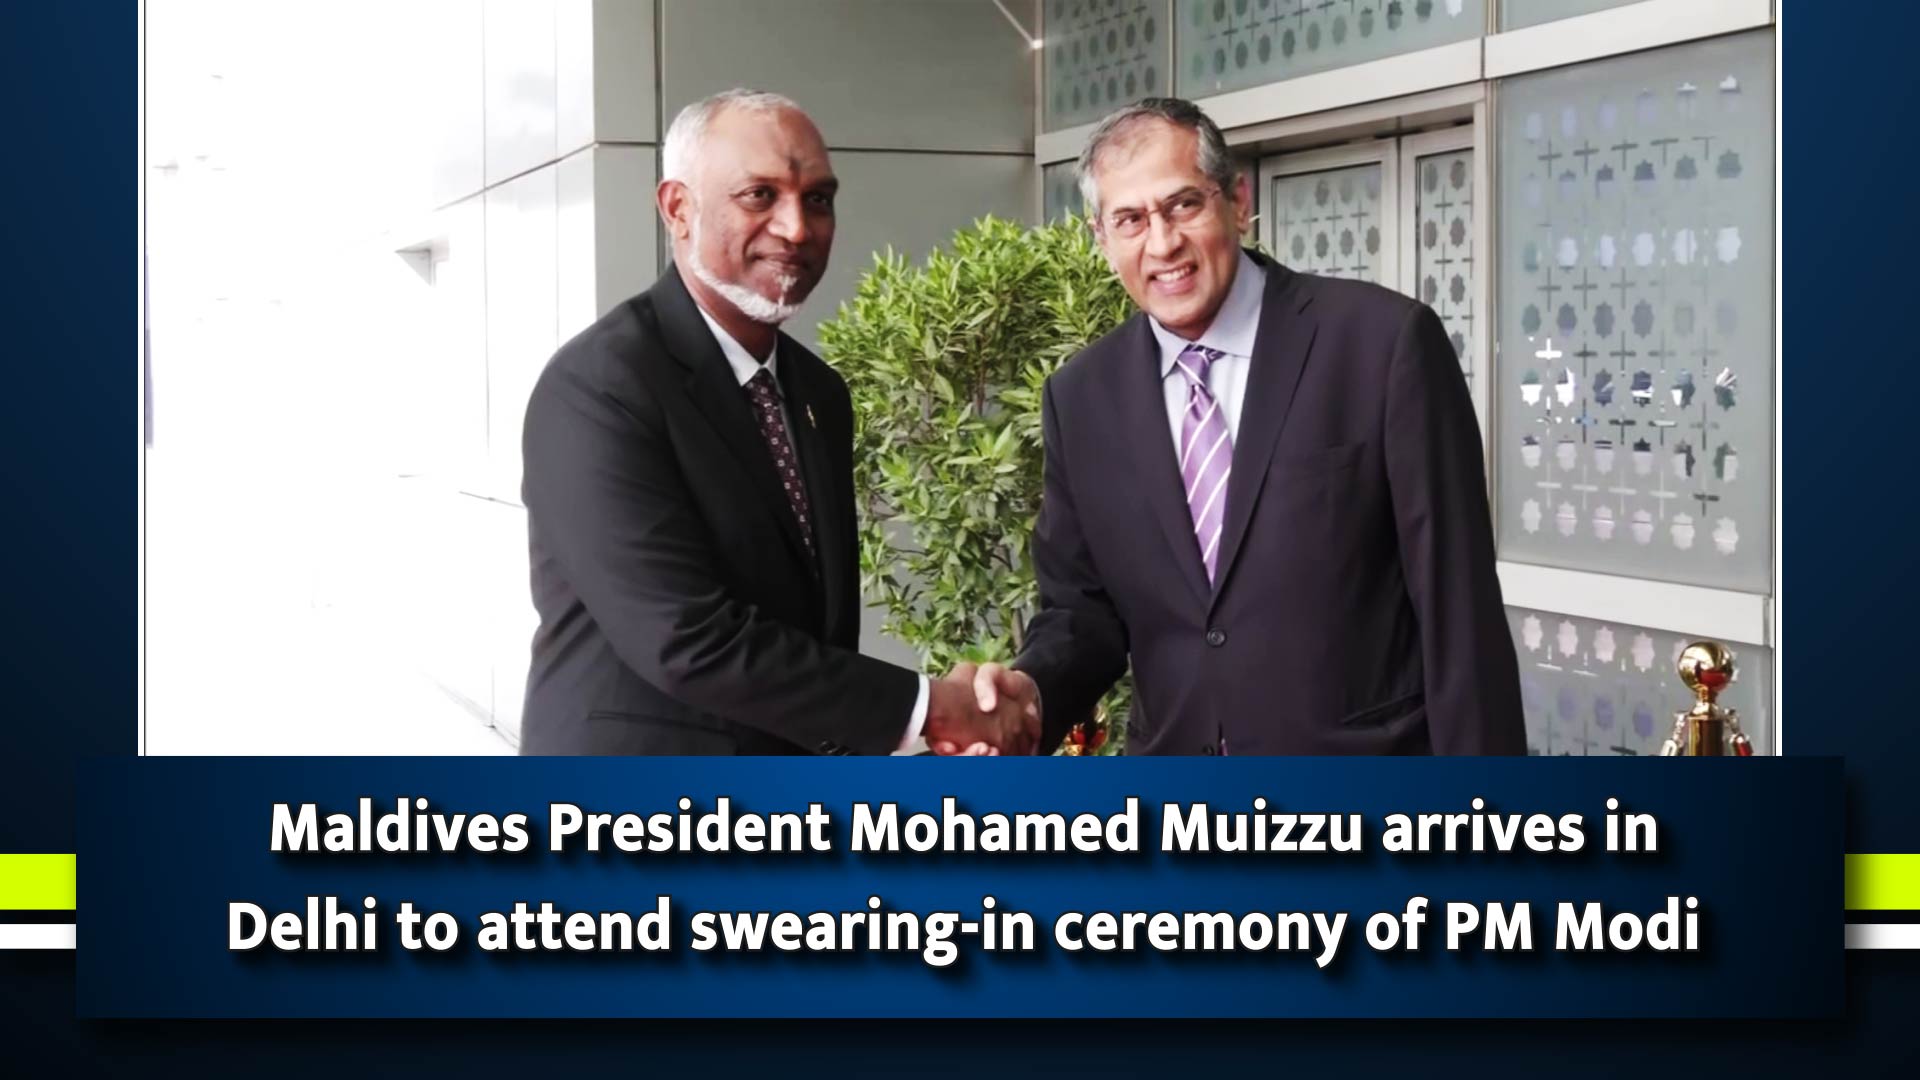 Maldives President Mohamed Muizzu arrives in Delhi to attend swearing-in ceremony of PM Narendra Modi